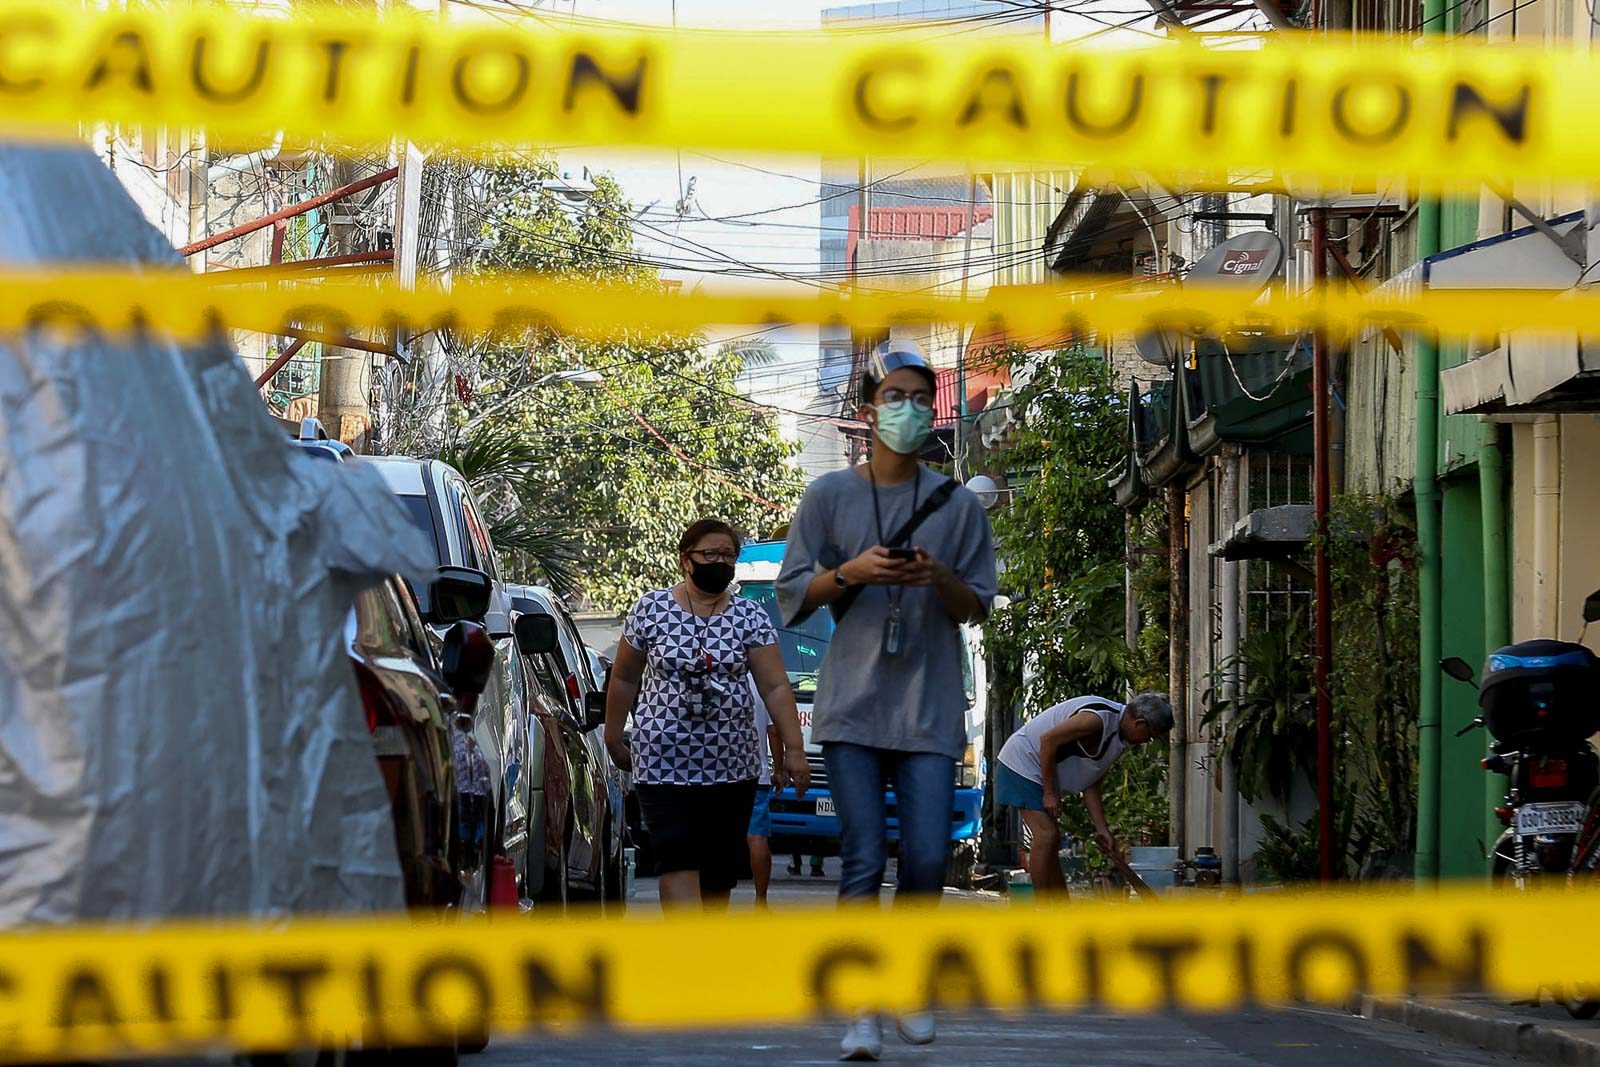 Metro Manila mayors to impose curfew starting March 15